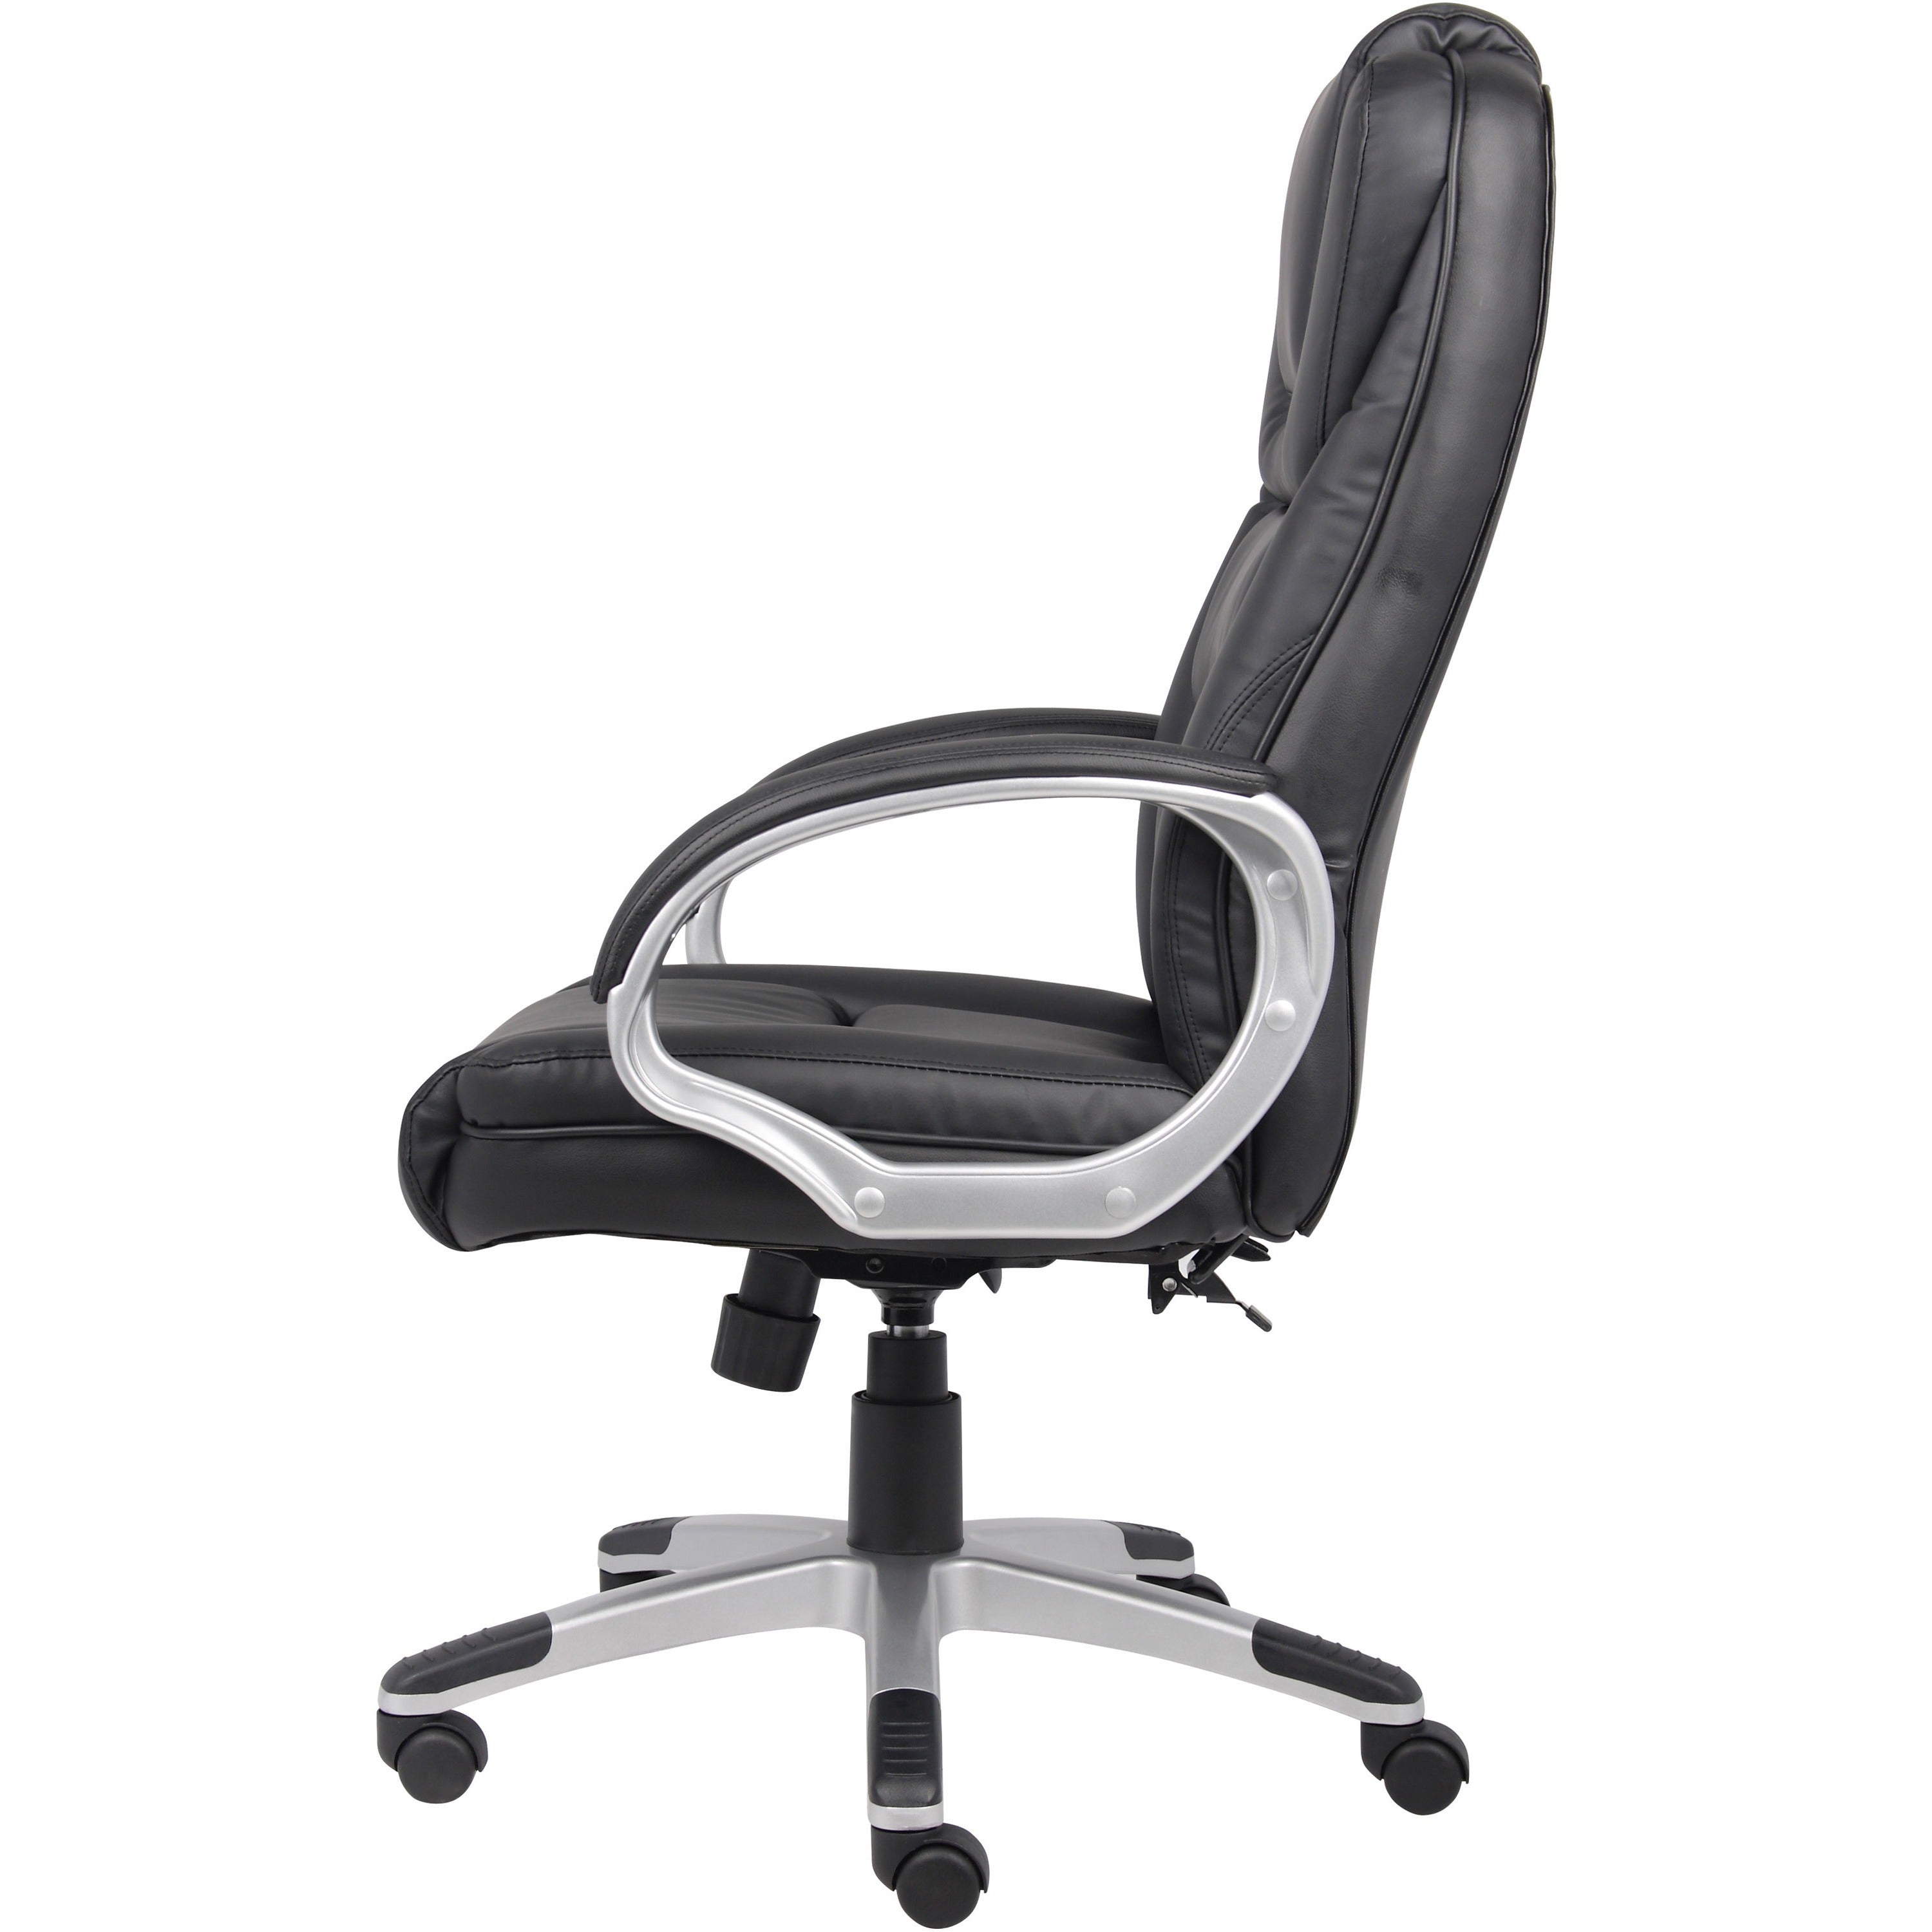 Boss High Back Executive Chair - Black LeatherPlus Seat - Black, Gray Nylon Frame - 5-star Base - 1 Each - 3